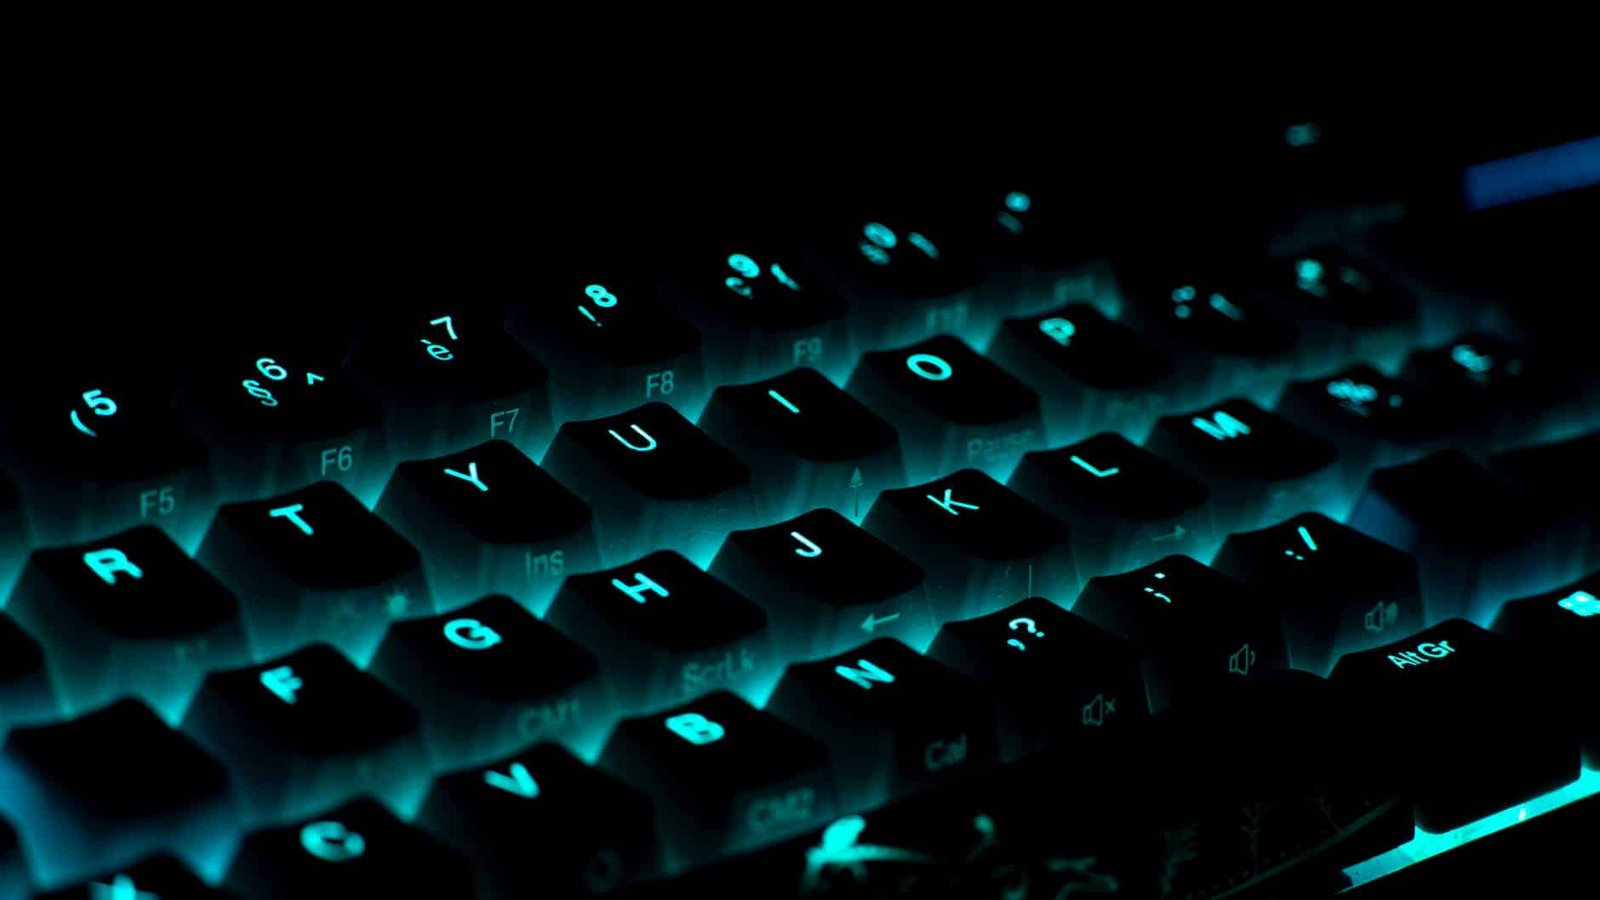 glow in the dark keyboard